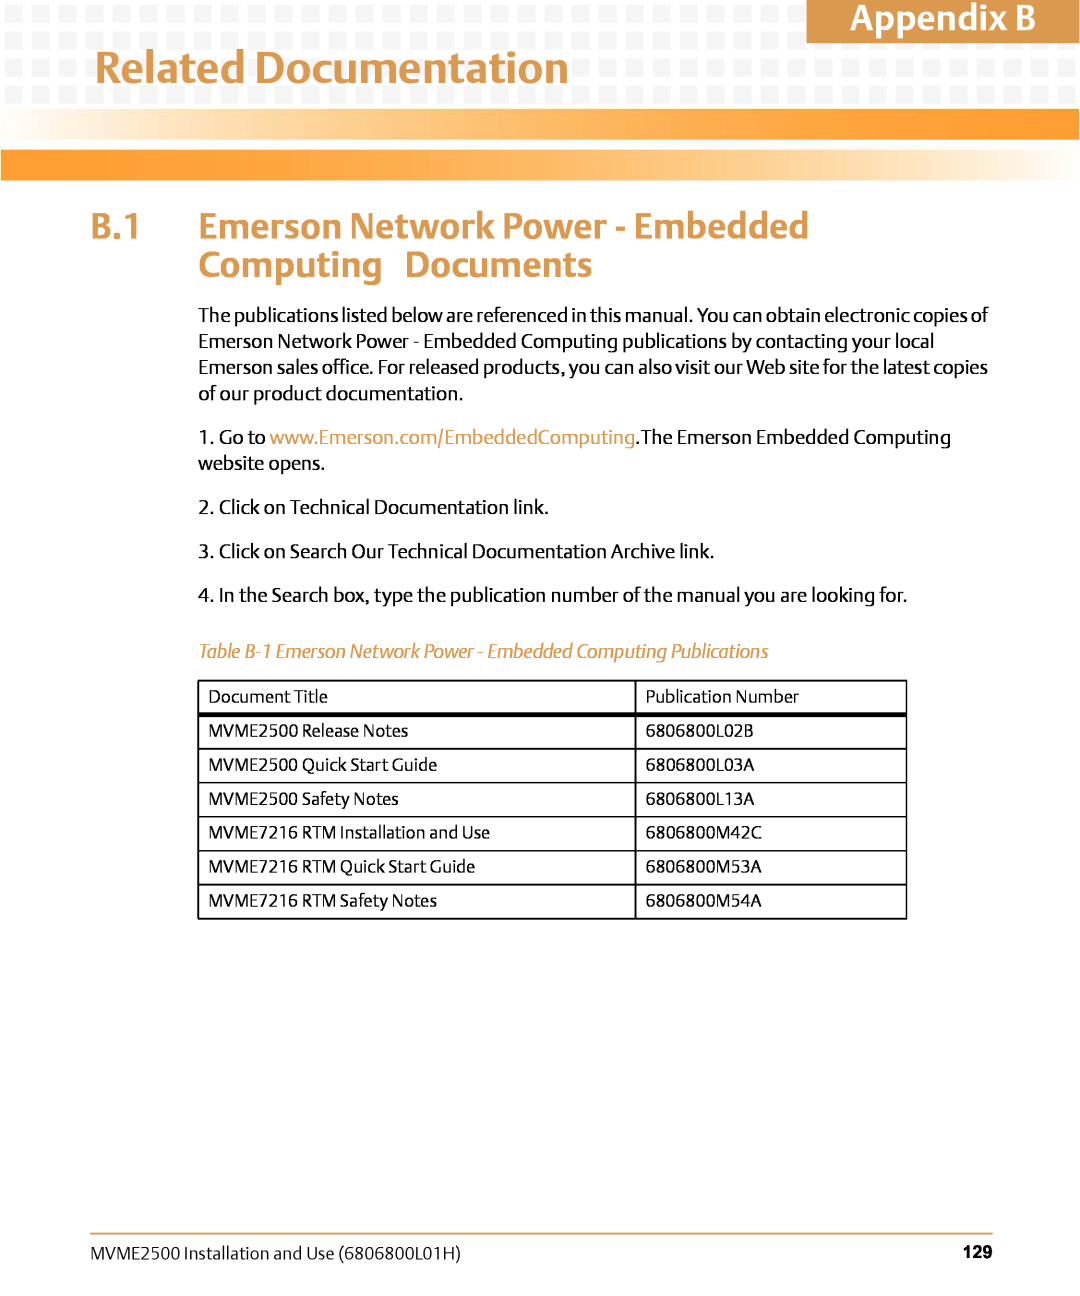 Emerson MVME2500 manual Related Documentation, Appendix B, B.1 Emerson Network Power - Embedded Computing Documents 